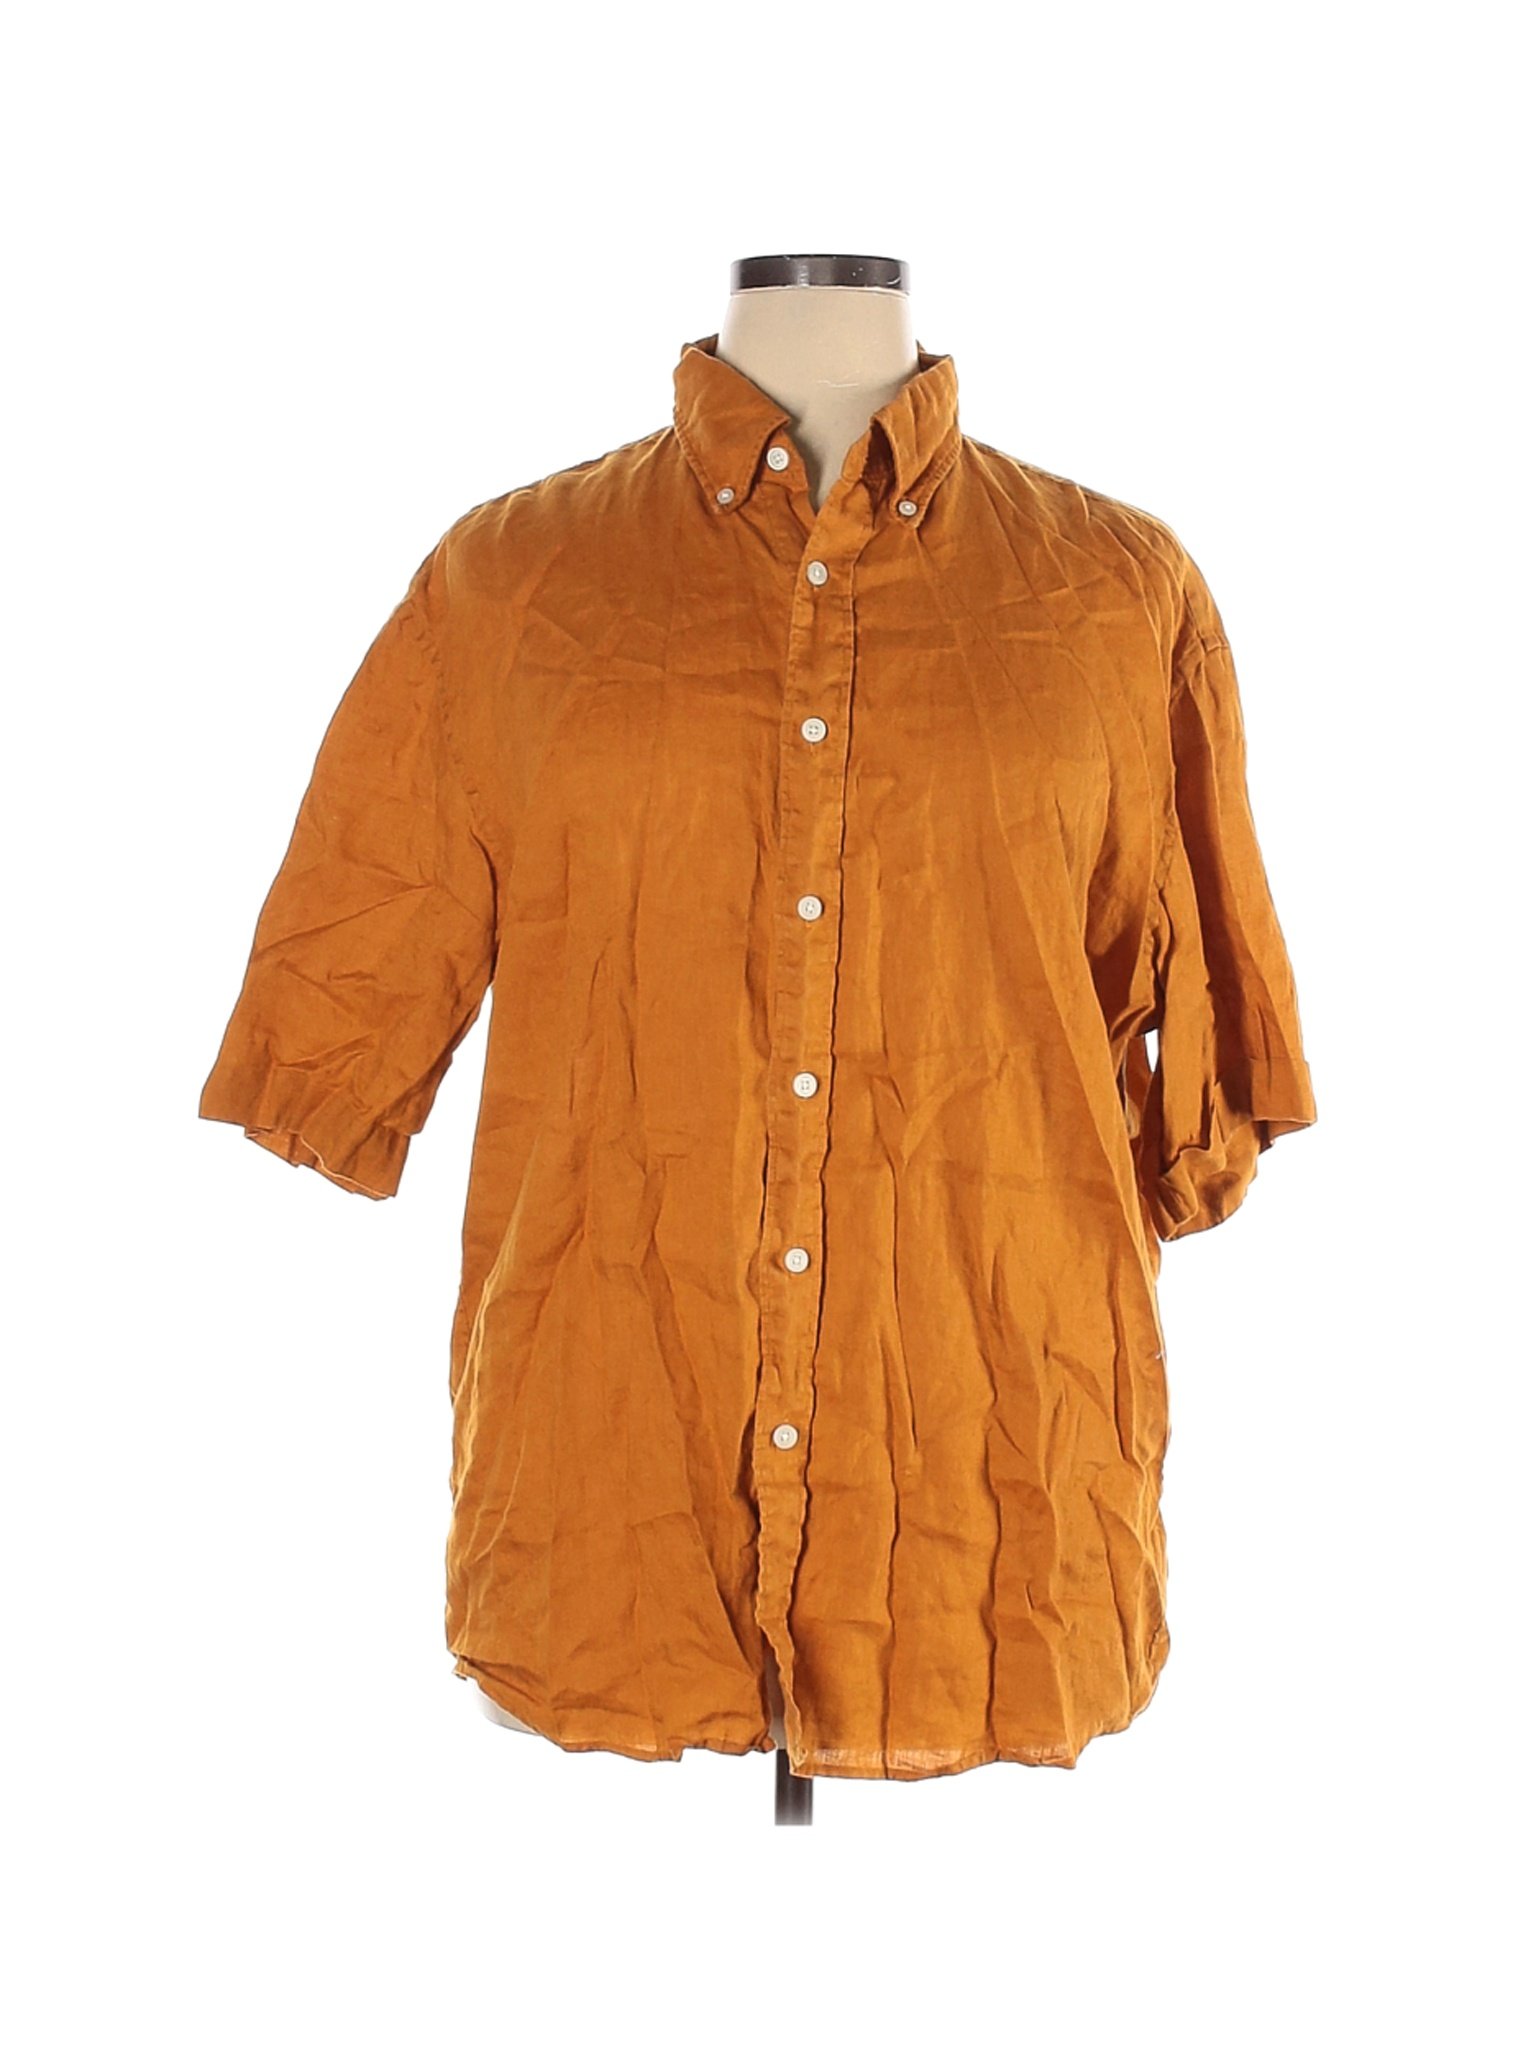 Uniqlo Women Yellow Short Sleeve Button-Down Shirt XL | eBay